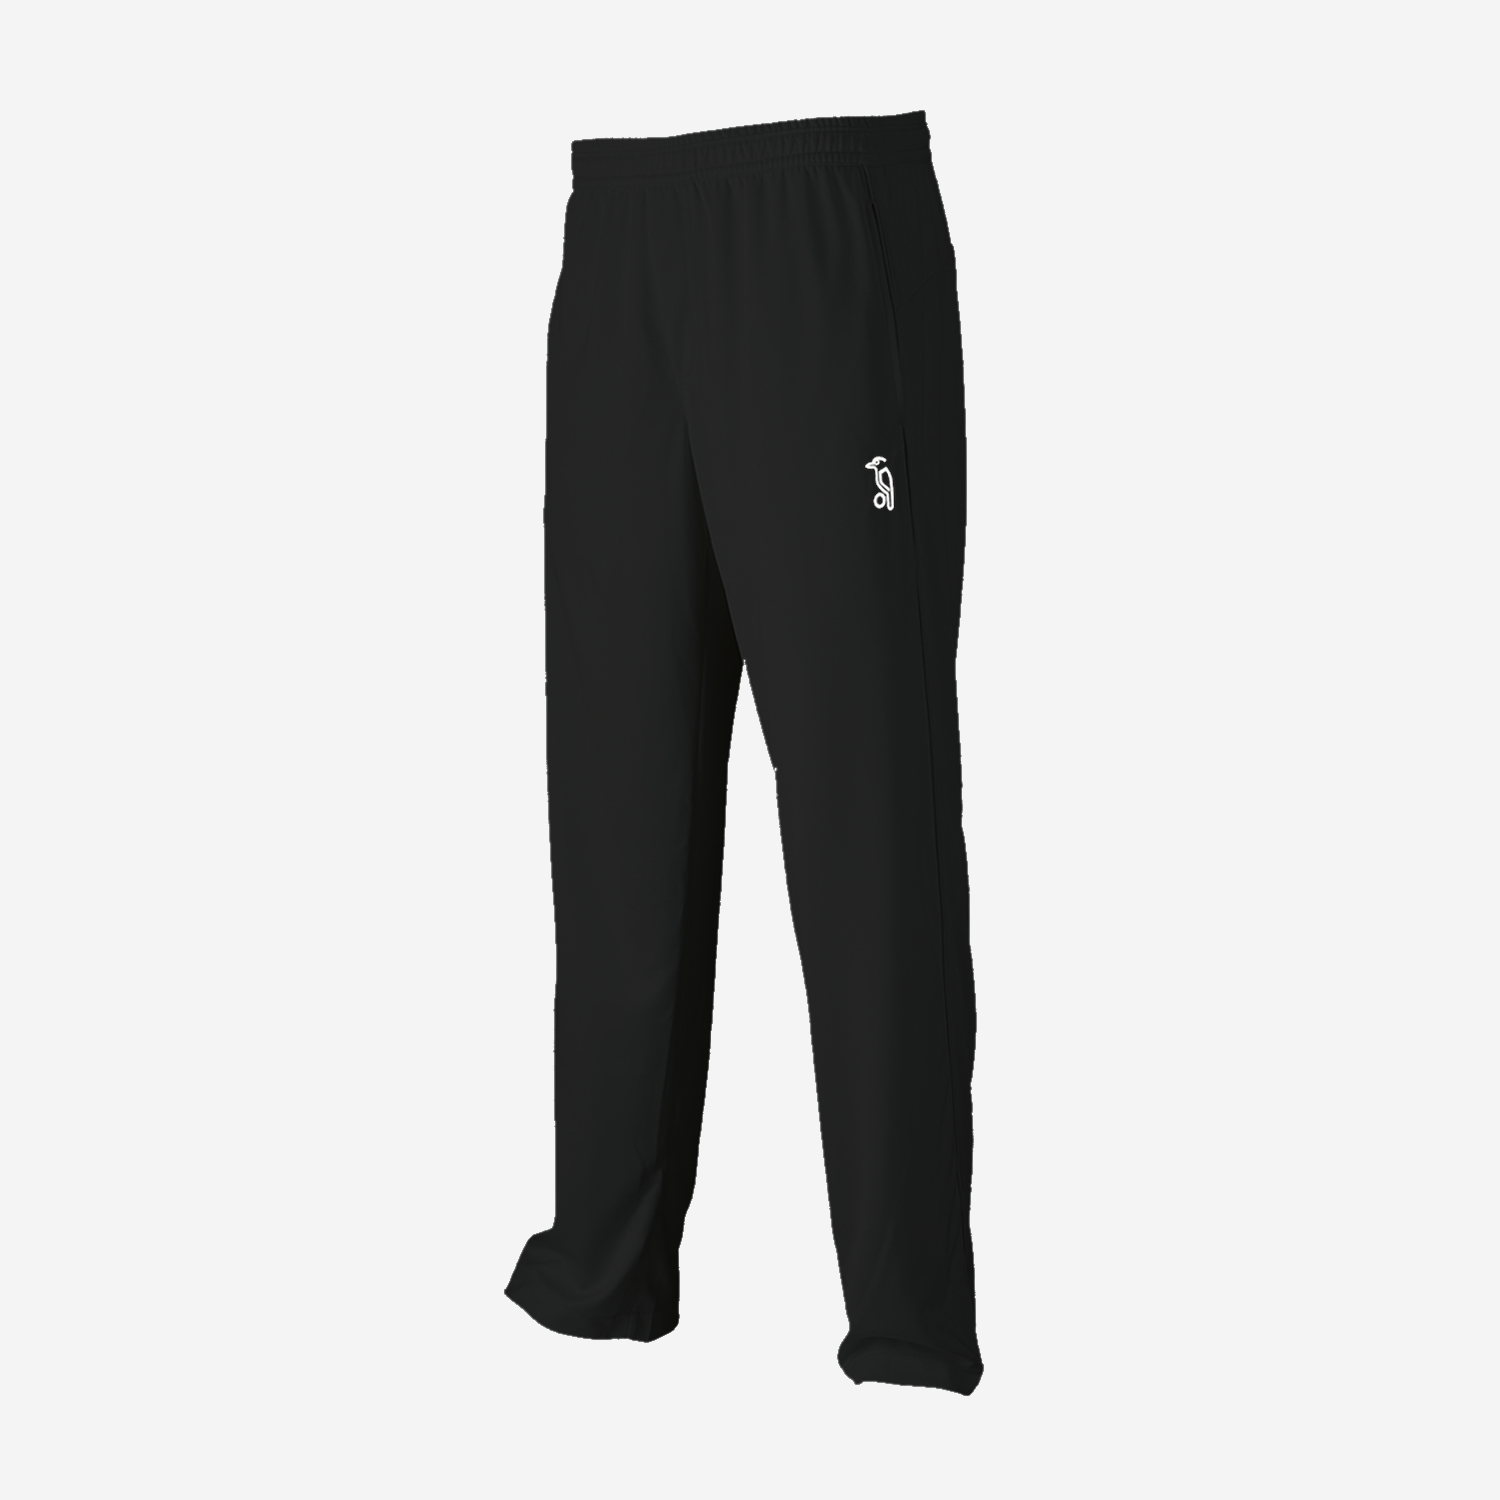 Buy Nike Trousers Online India| Nike Cricket Pants Online Store